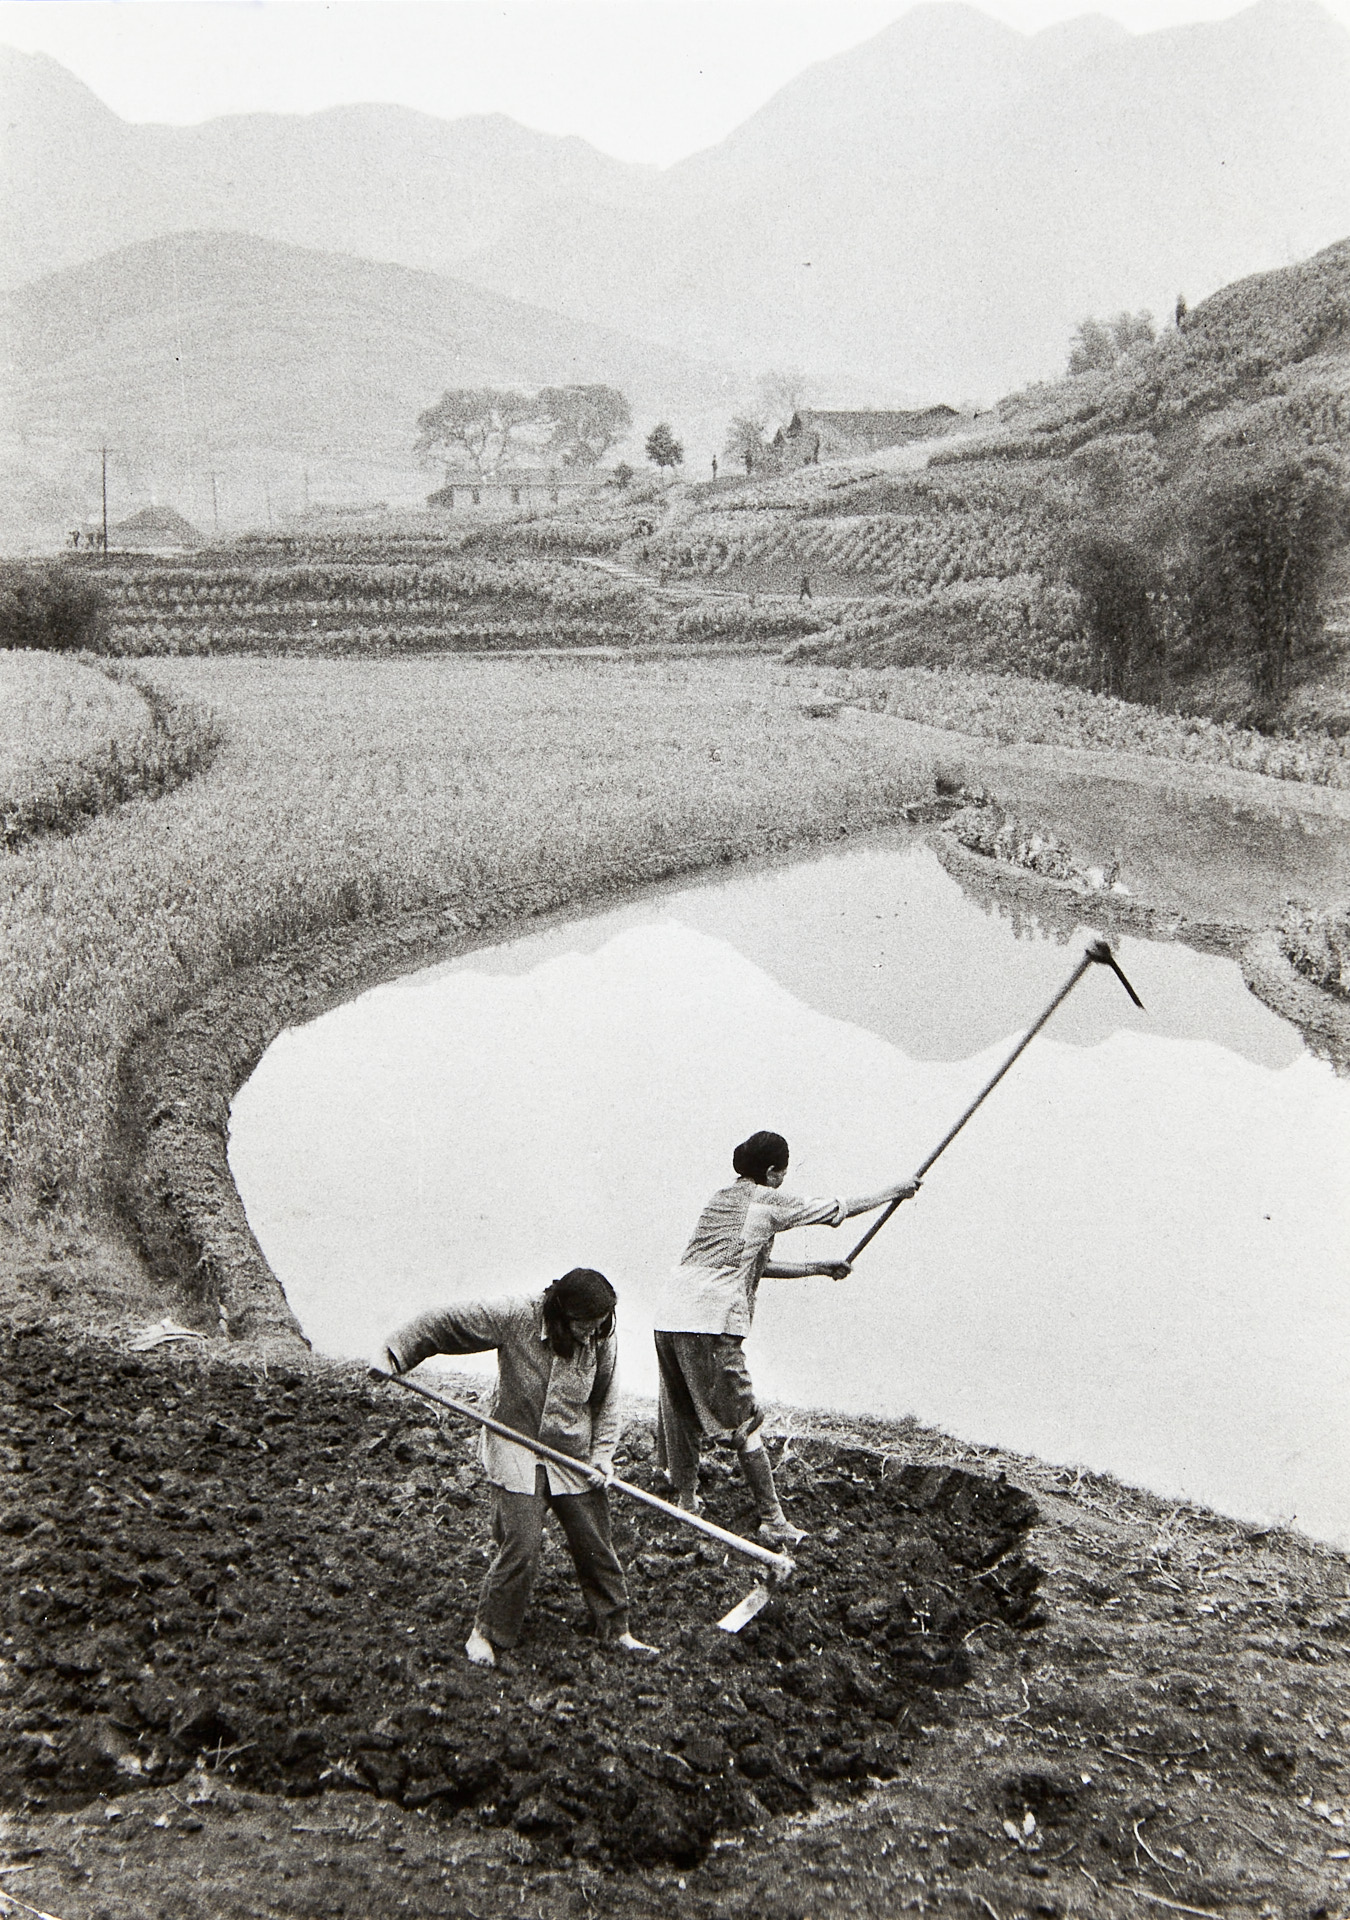 Sichuan Province, China 1957